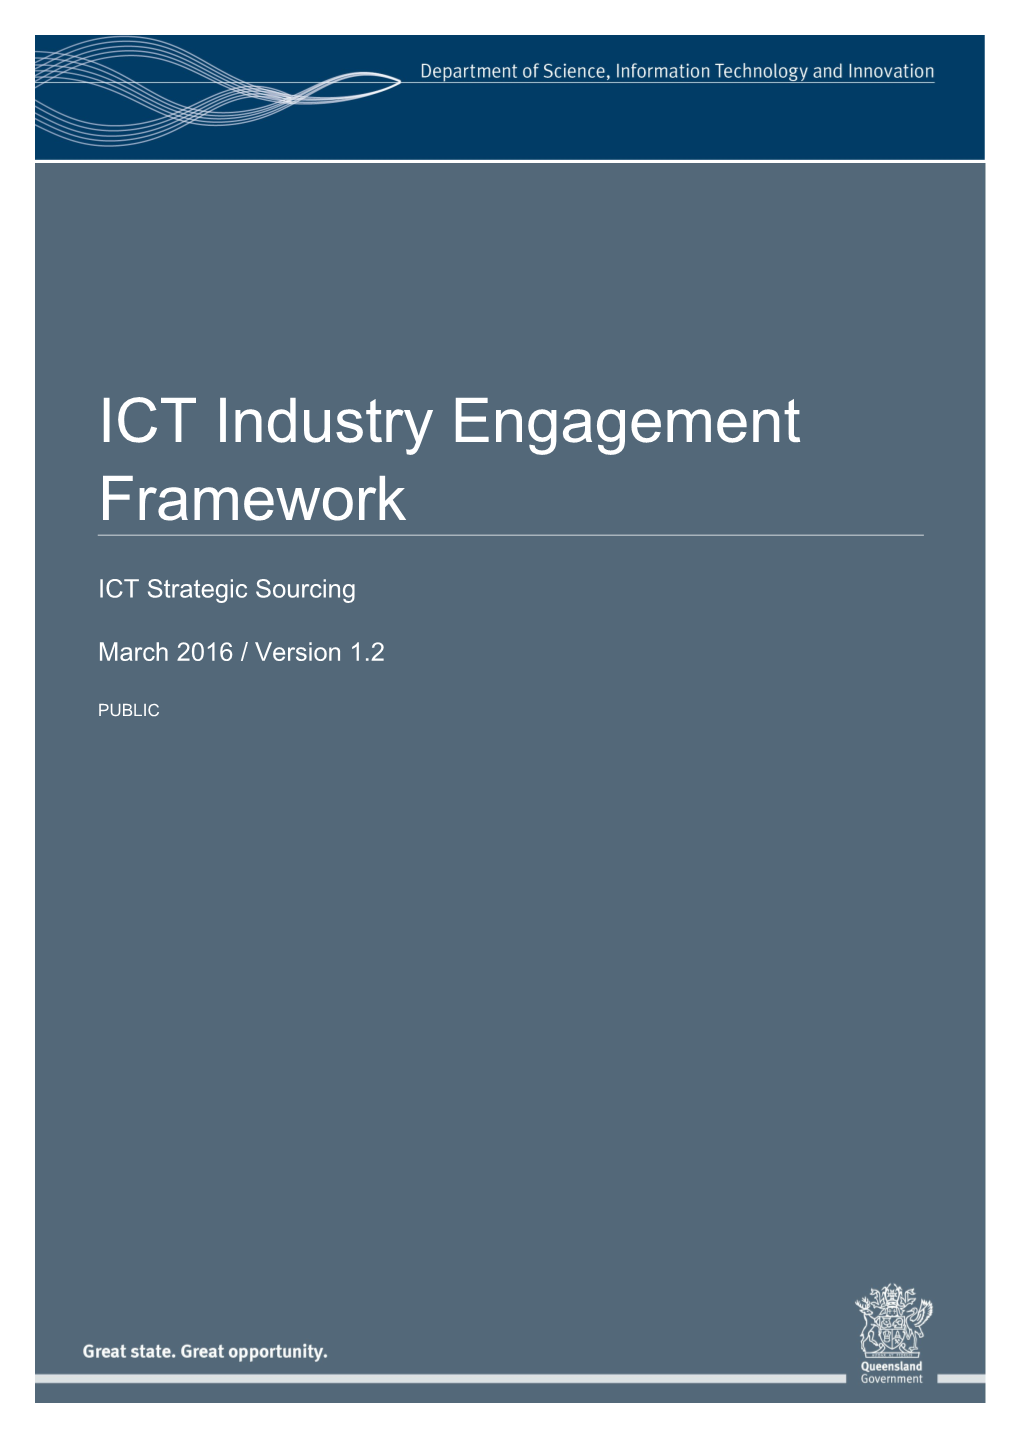 ICT Industry Engagement Framework